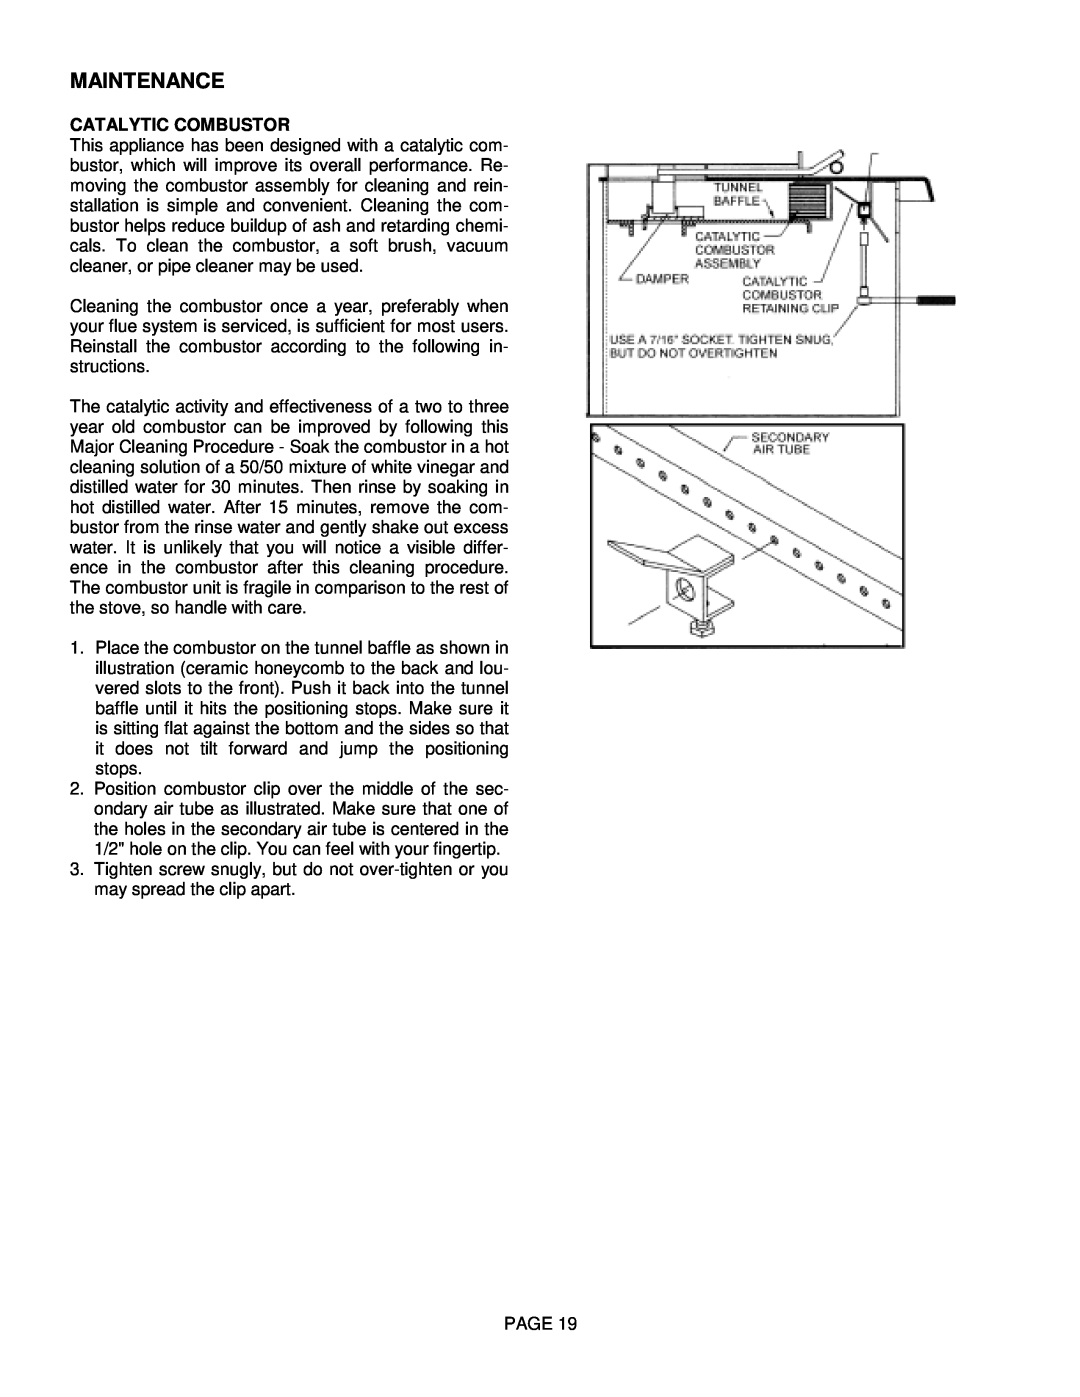 Lennox International Inc BV4000C operation manual Maintenance, Catalytic Combustor, Page 